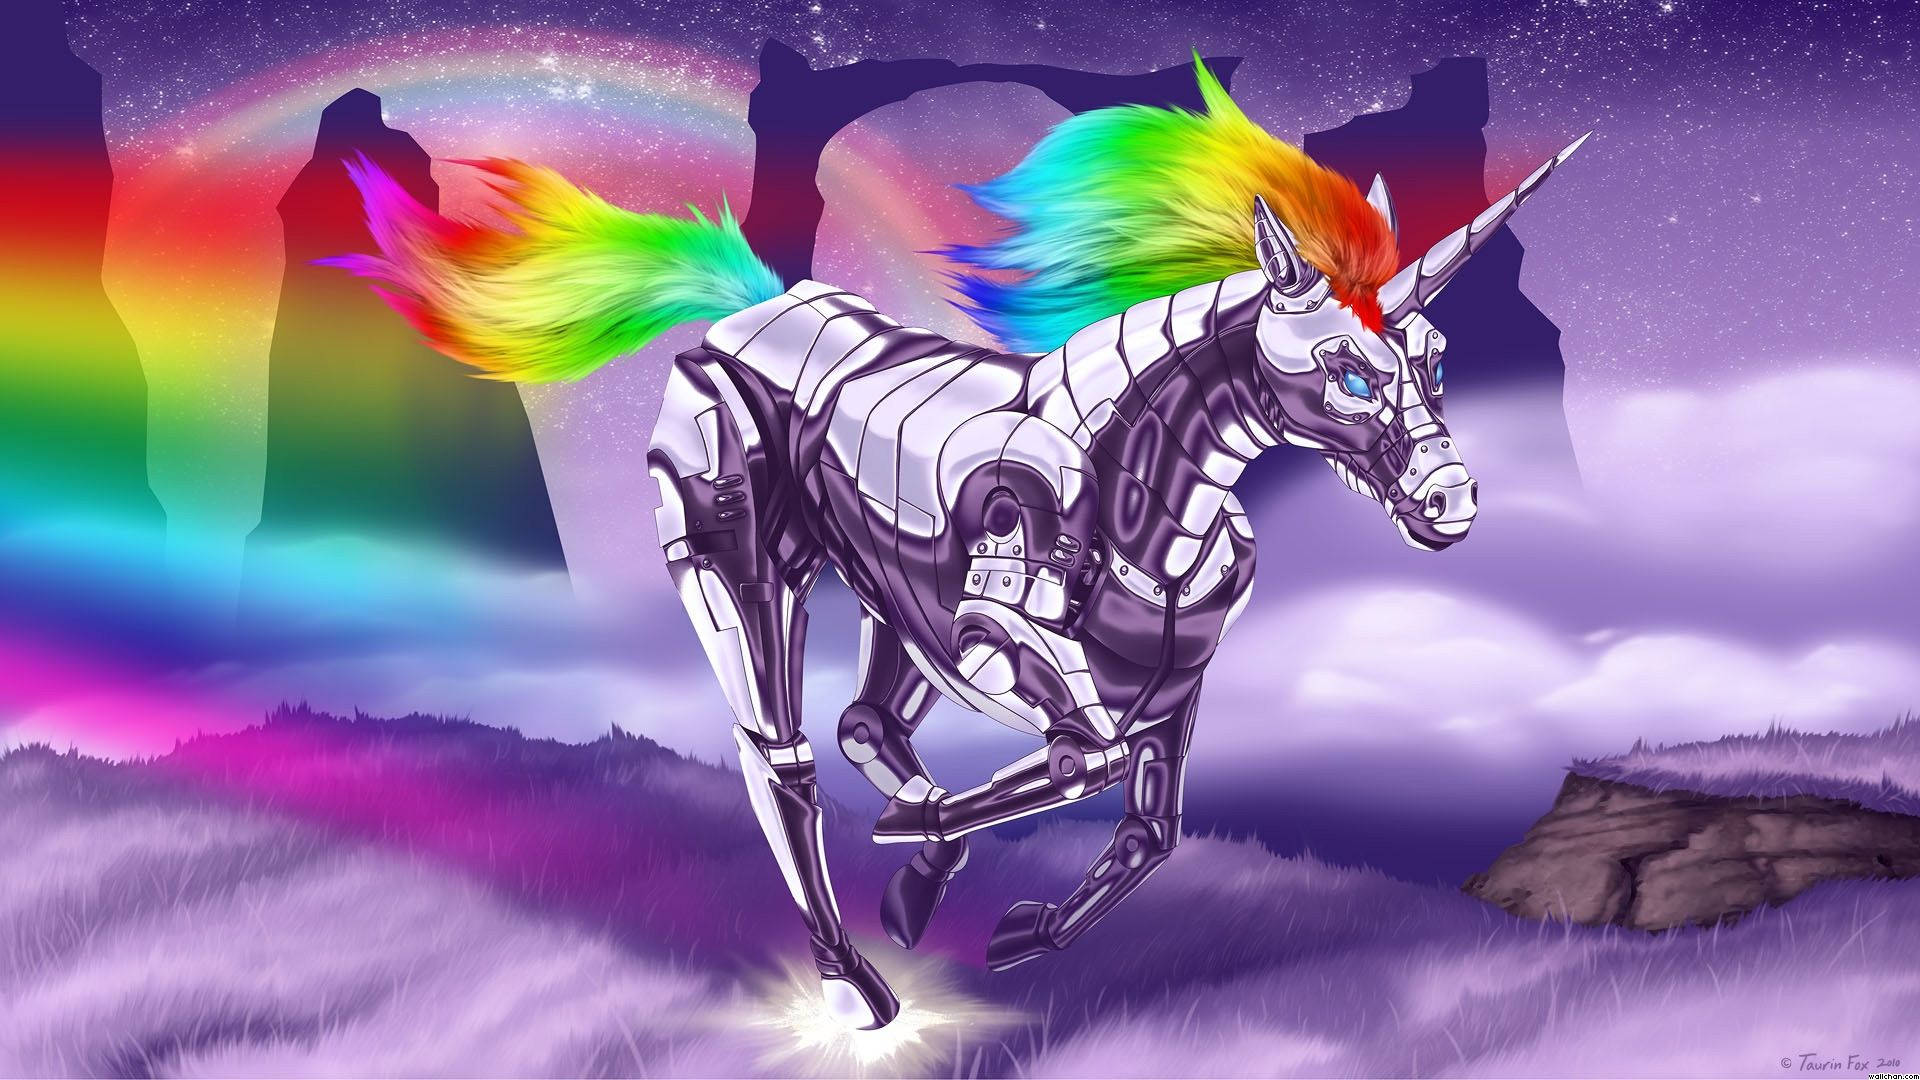 Cute Kawaii Rainbow Unicorn on a Blue Background Vector Stock Vector   Illustration of cartoon background 138747507